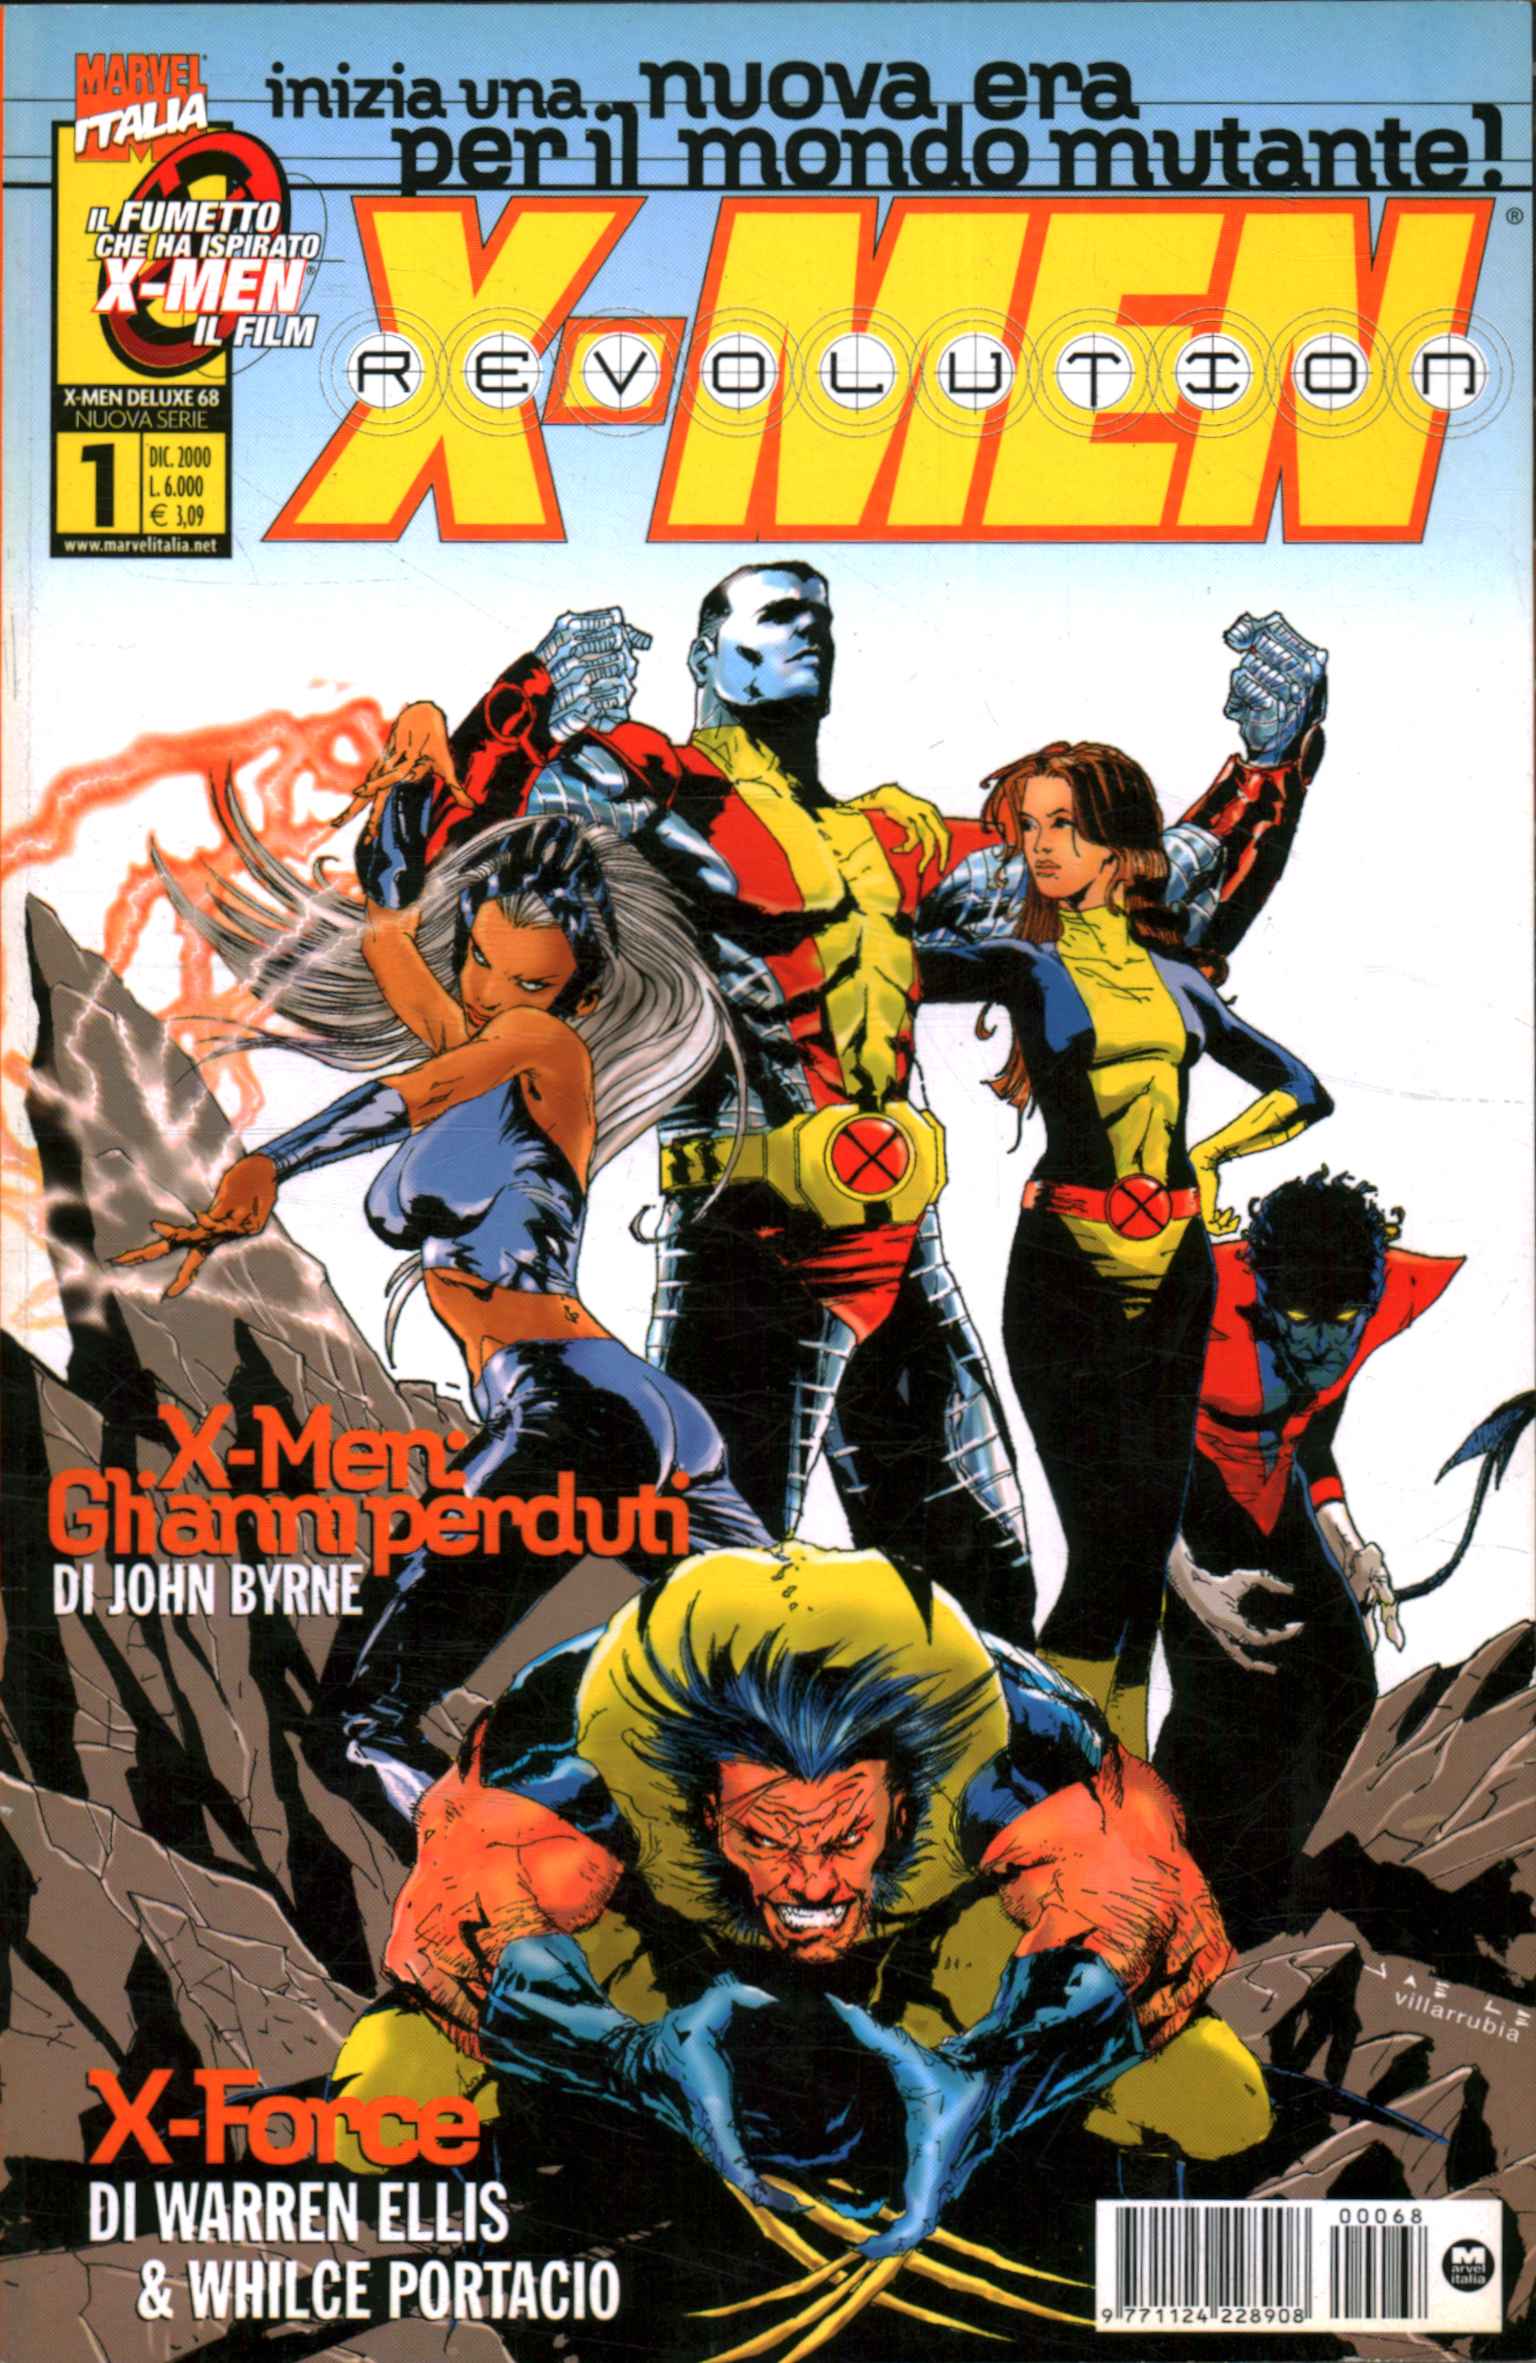 X-Men Revolution. Serie completa (16 Vol